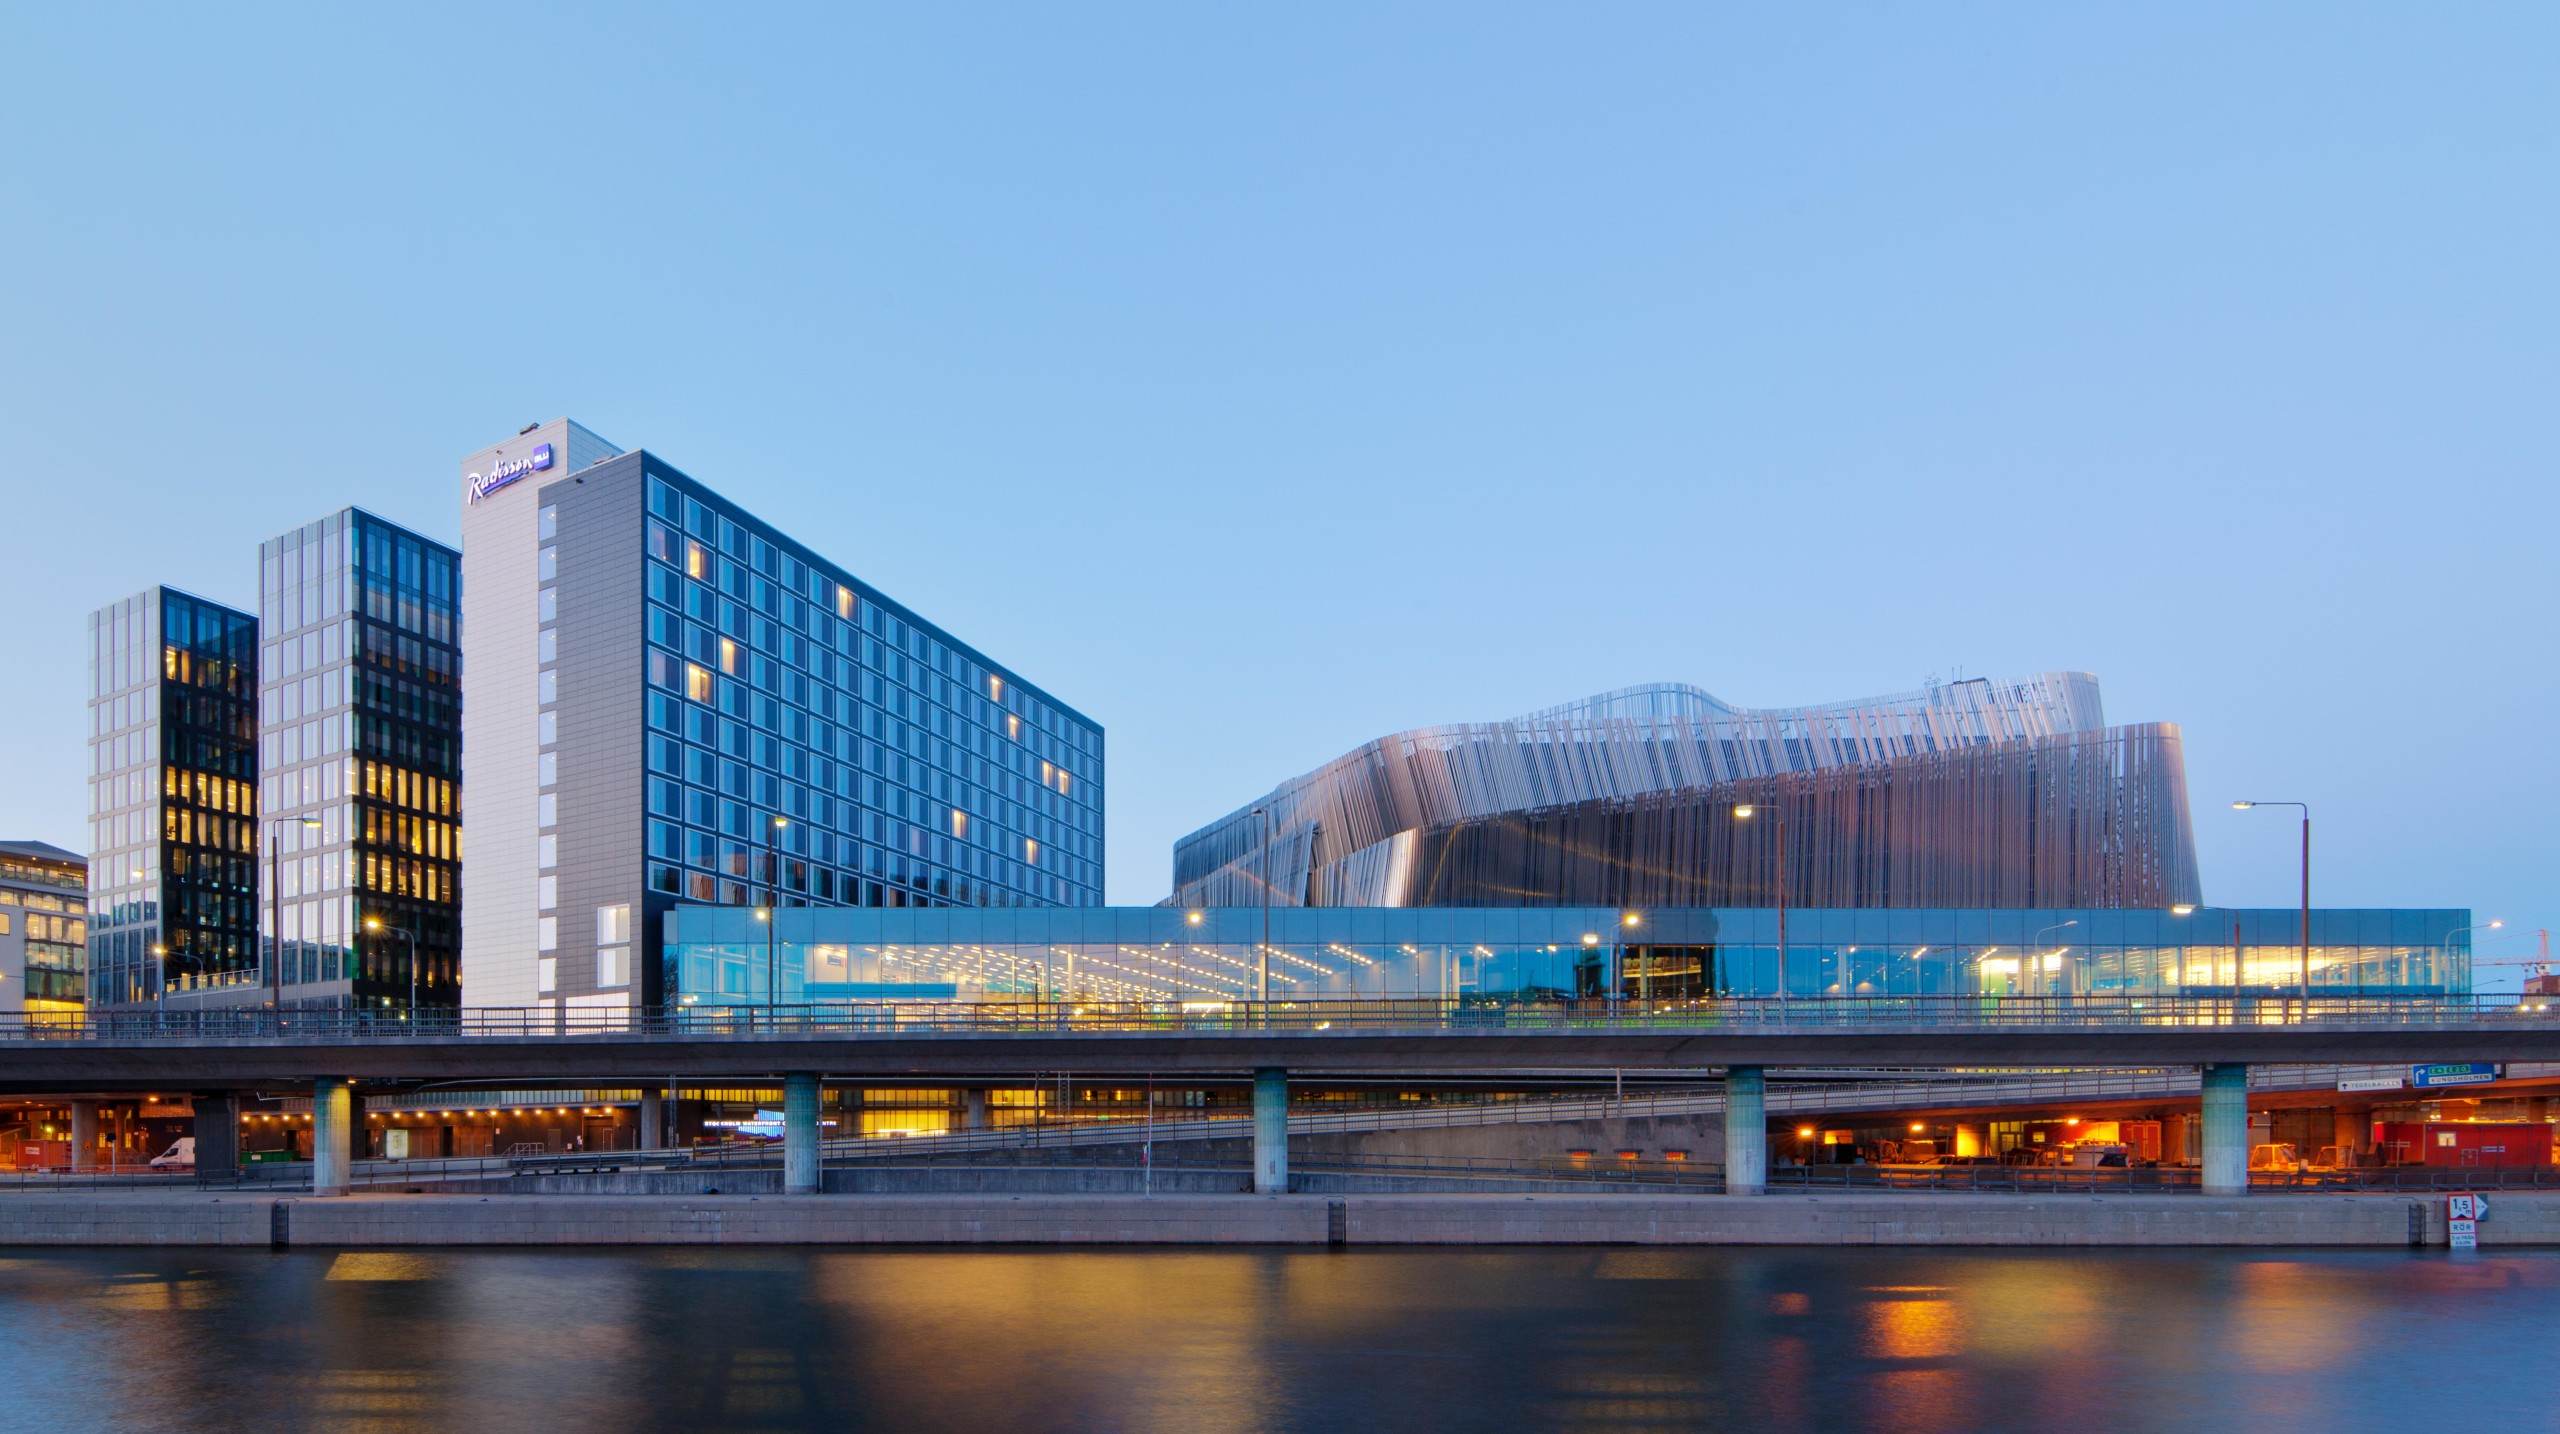 Stockholm Waterfront Congress Center